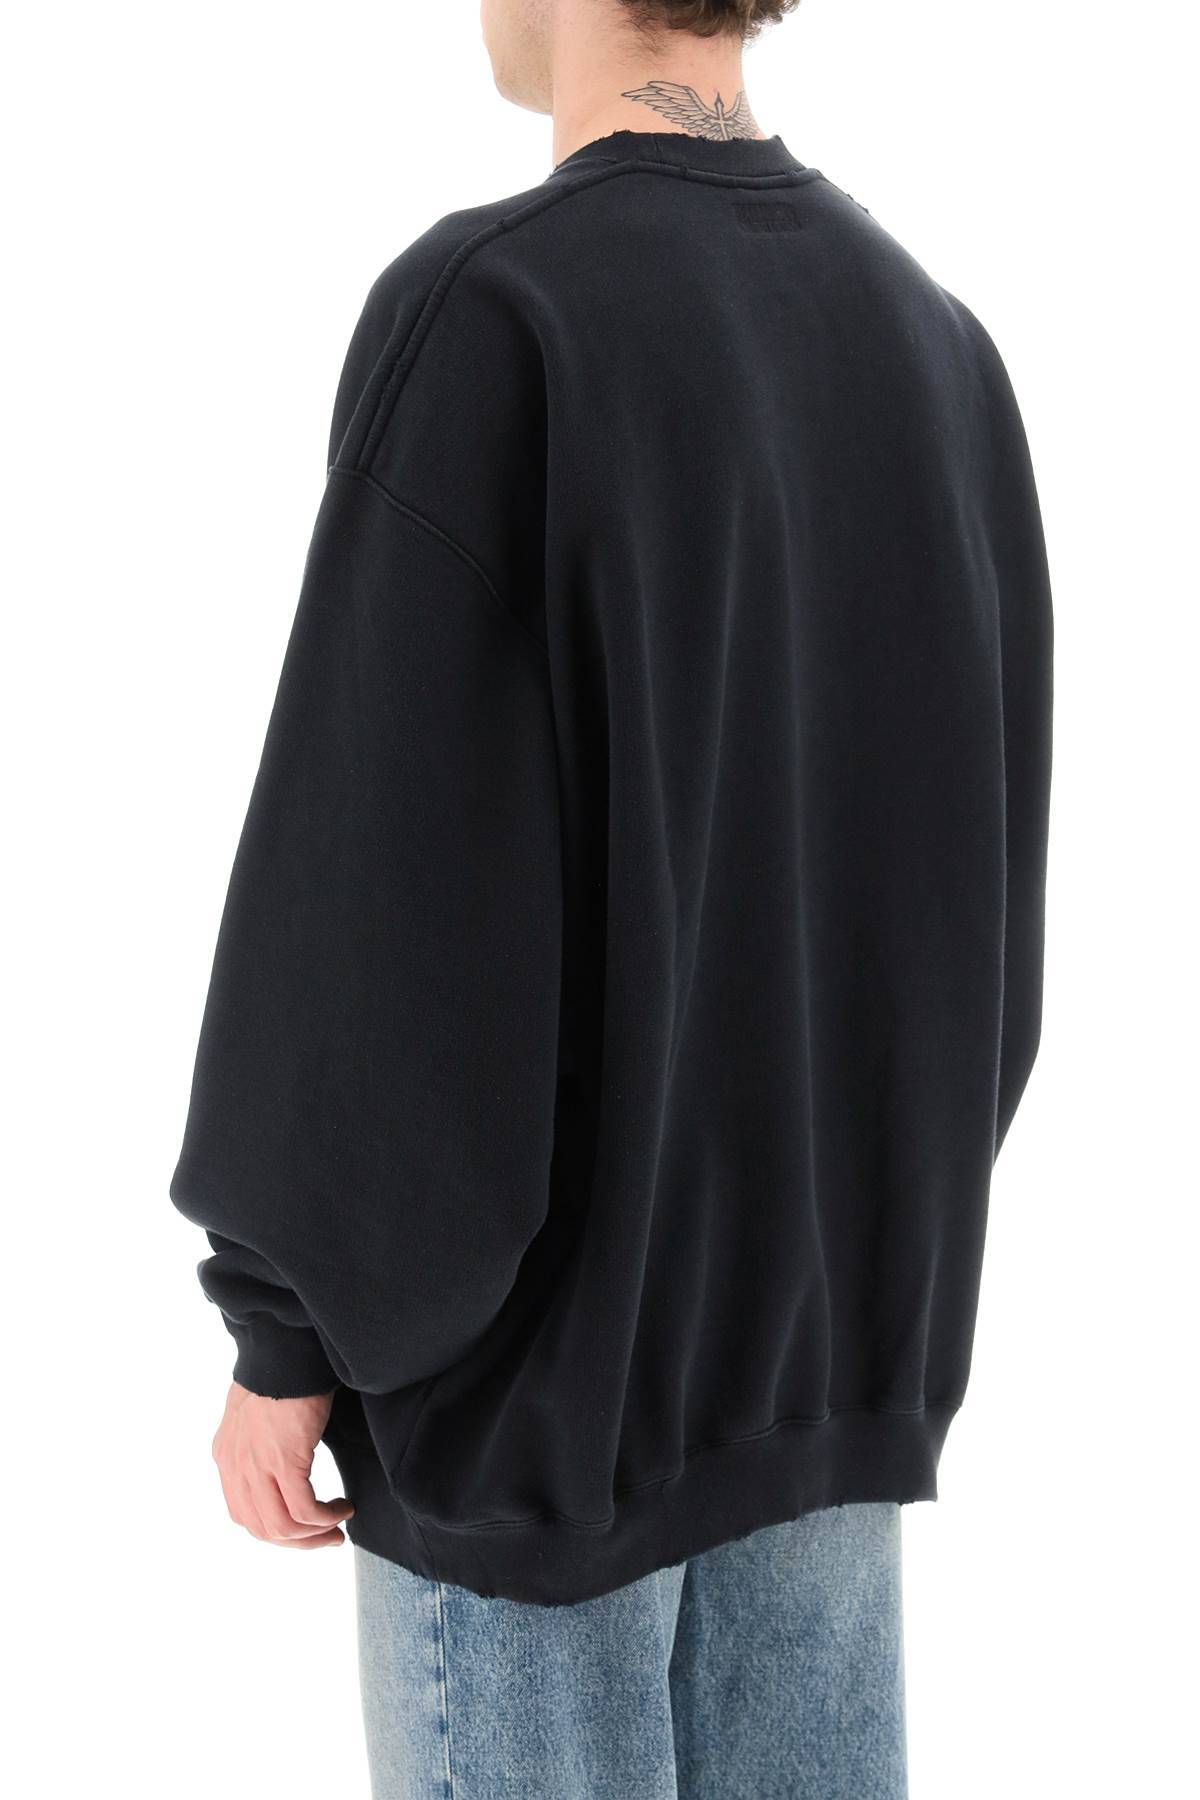 Shop Vetements Afterlife Embroidery Sweatshirt In Black